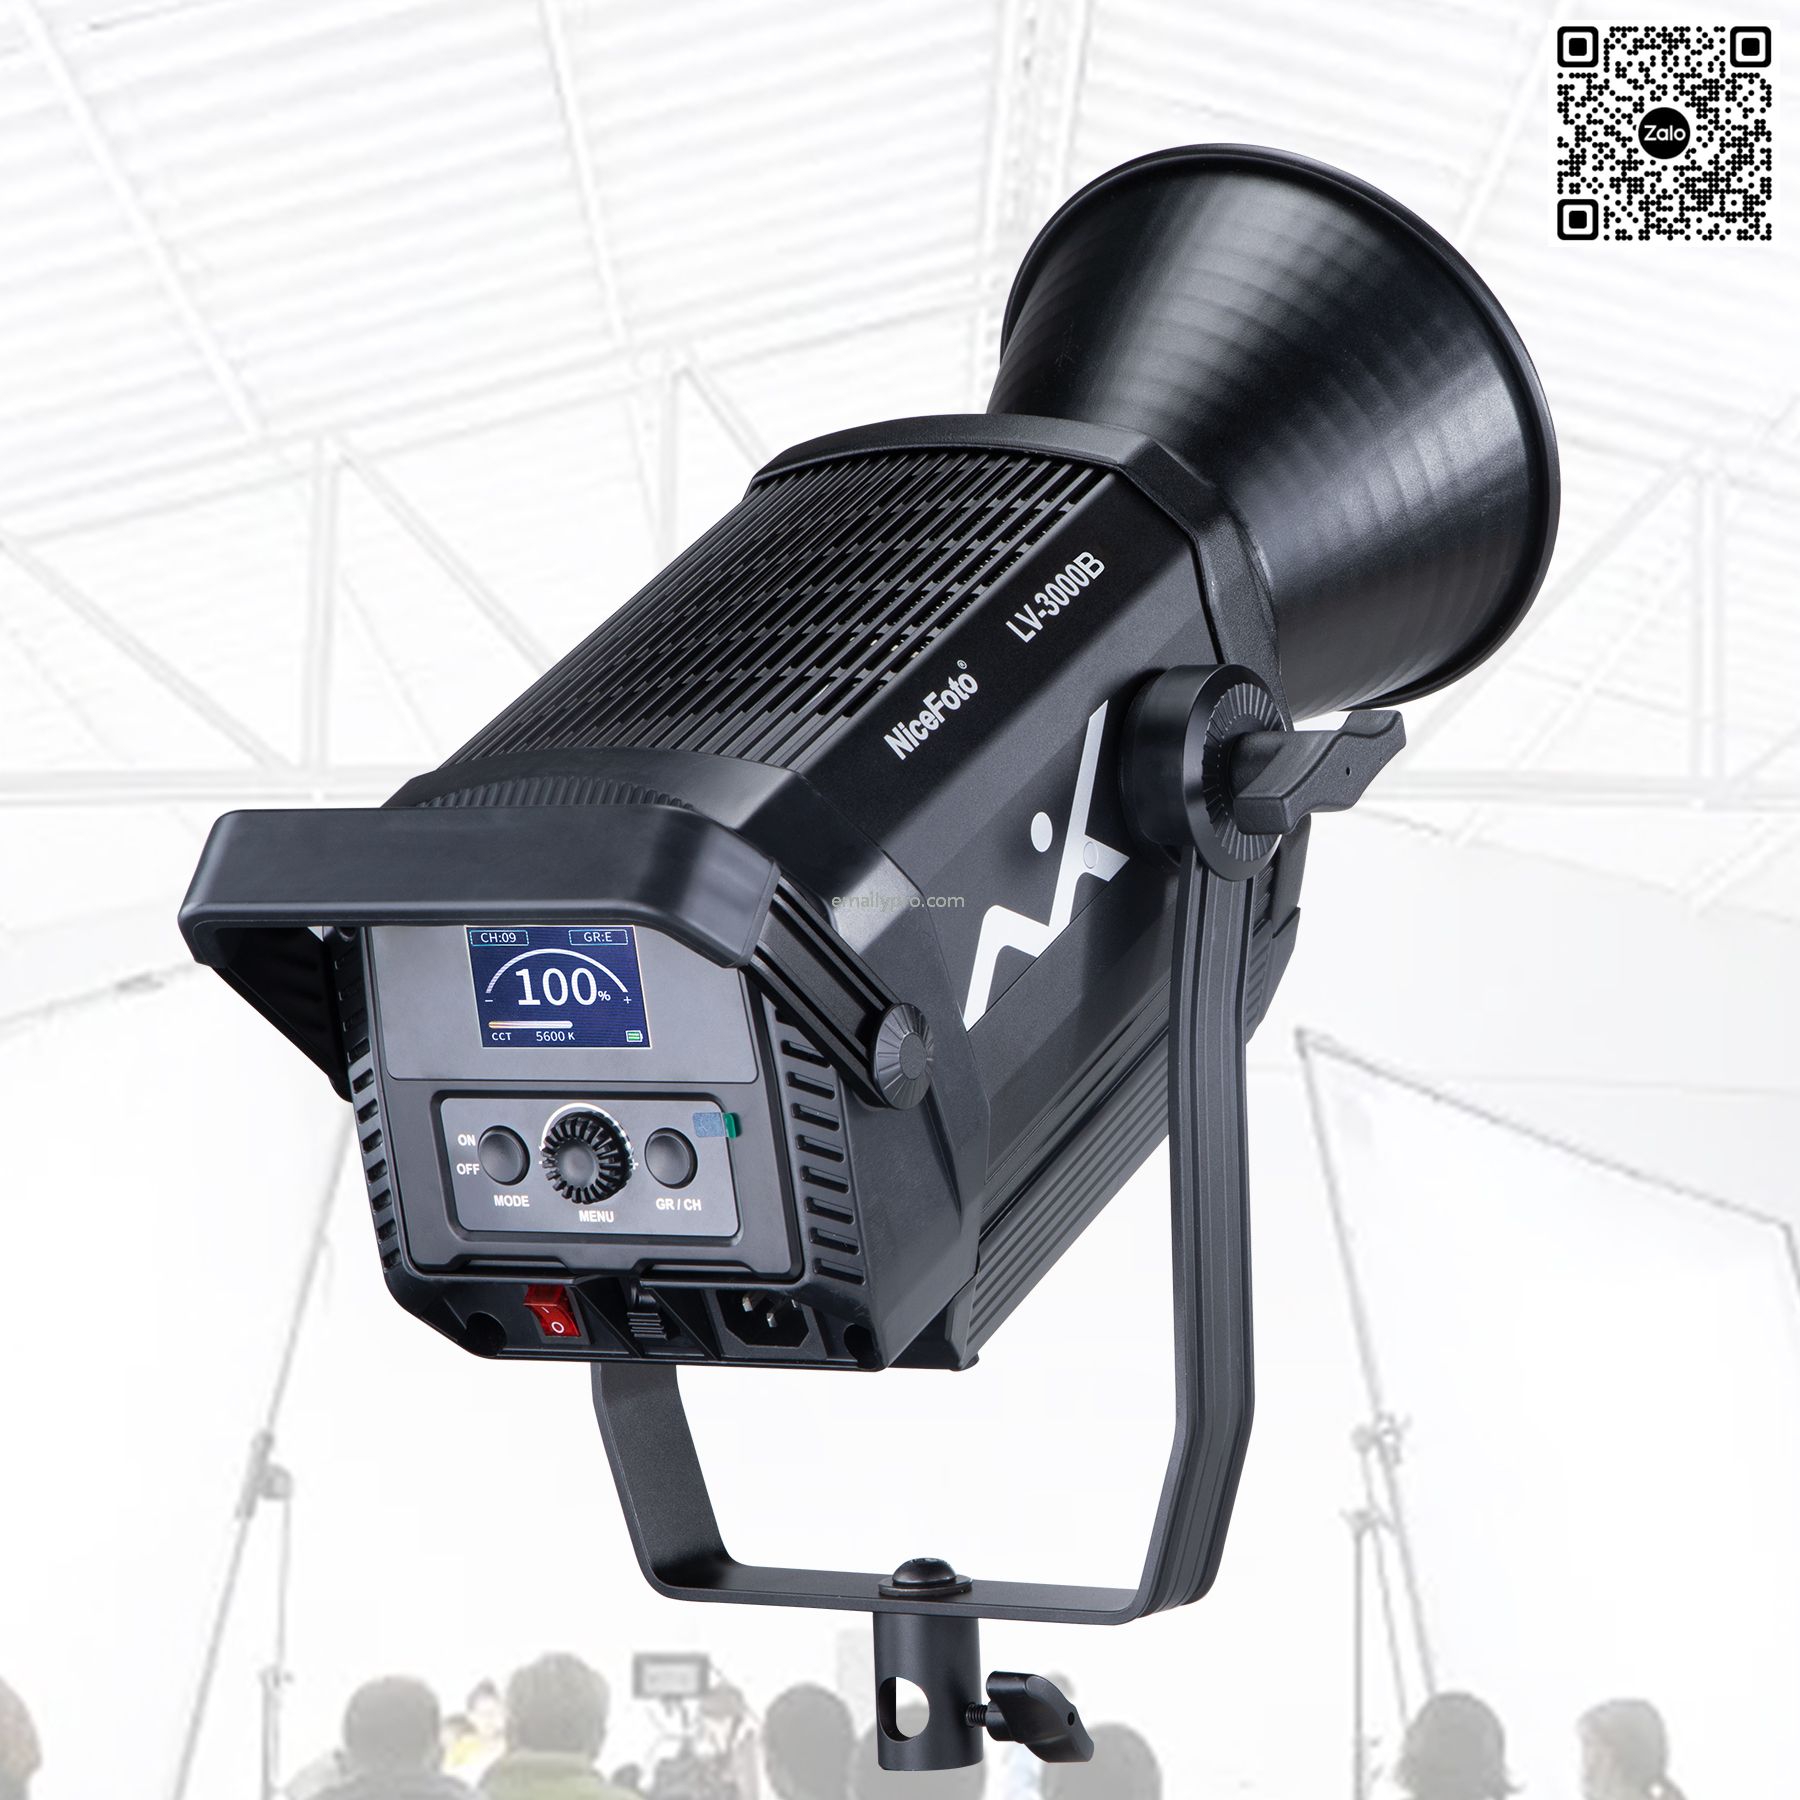 NiceFoto LV-3000B LED VideoLight 300W